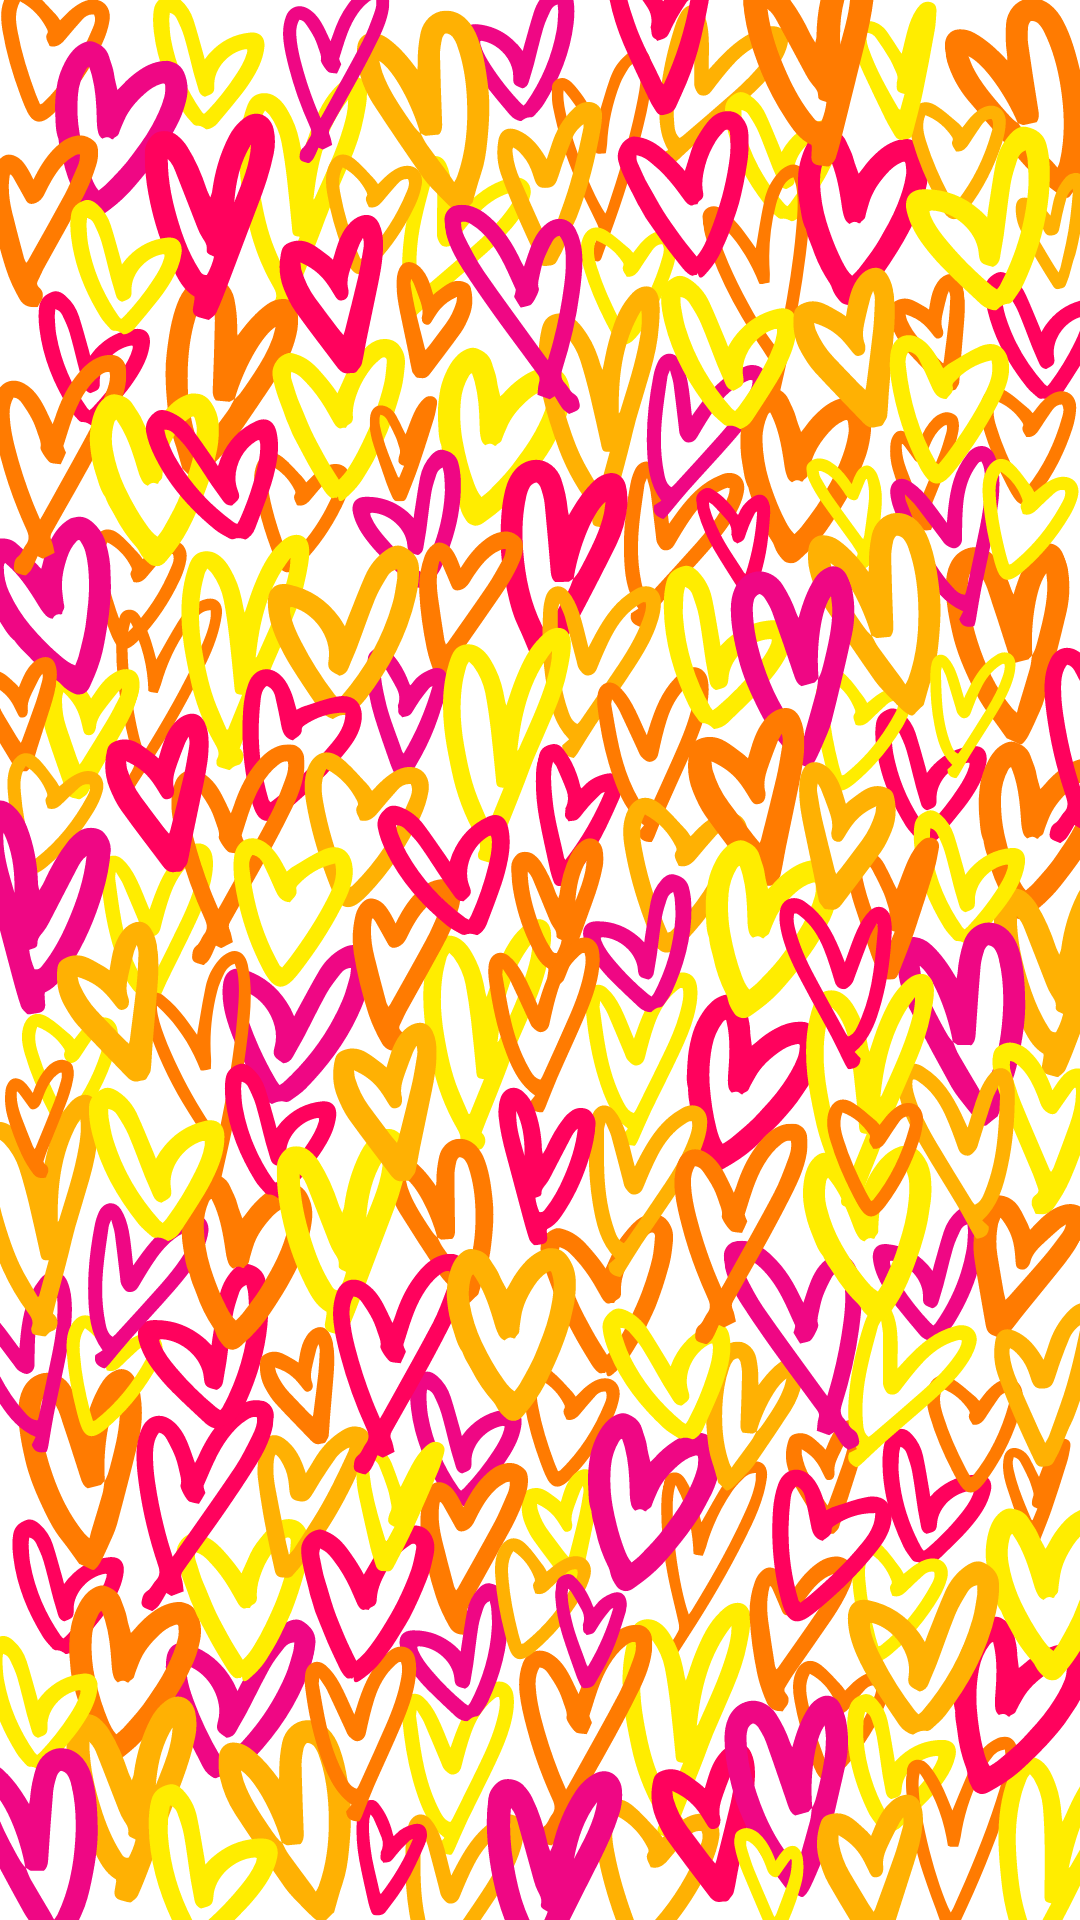 preppy hearts wallpaper. Preppy wallpaper, Heart wallpaper, iPhone wallpaper preppy